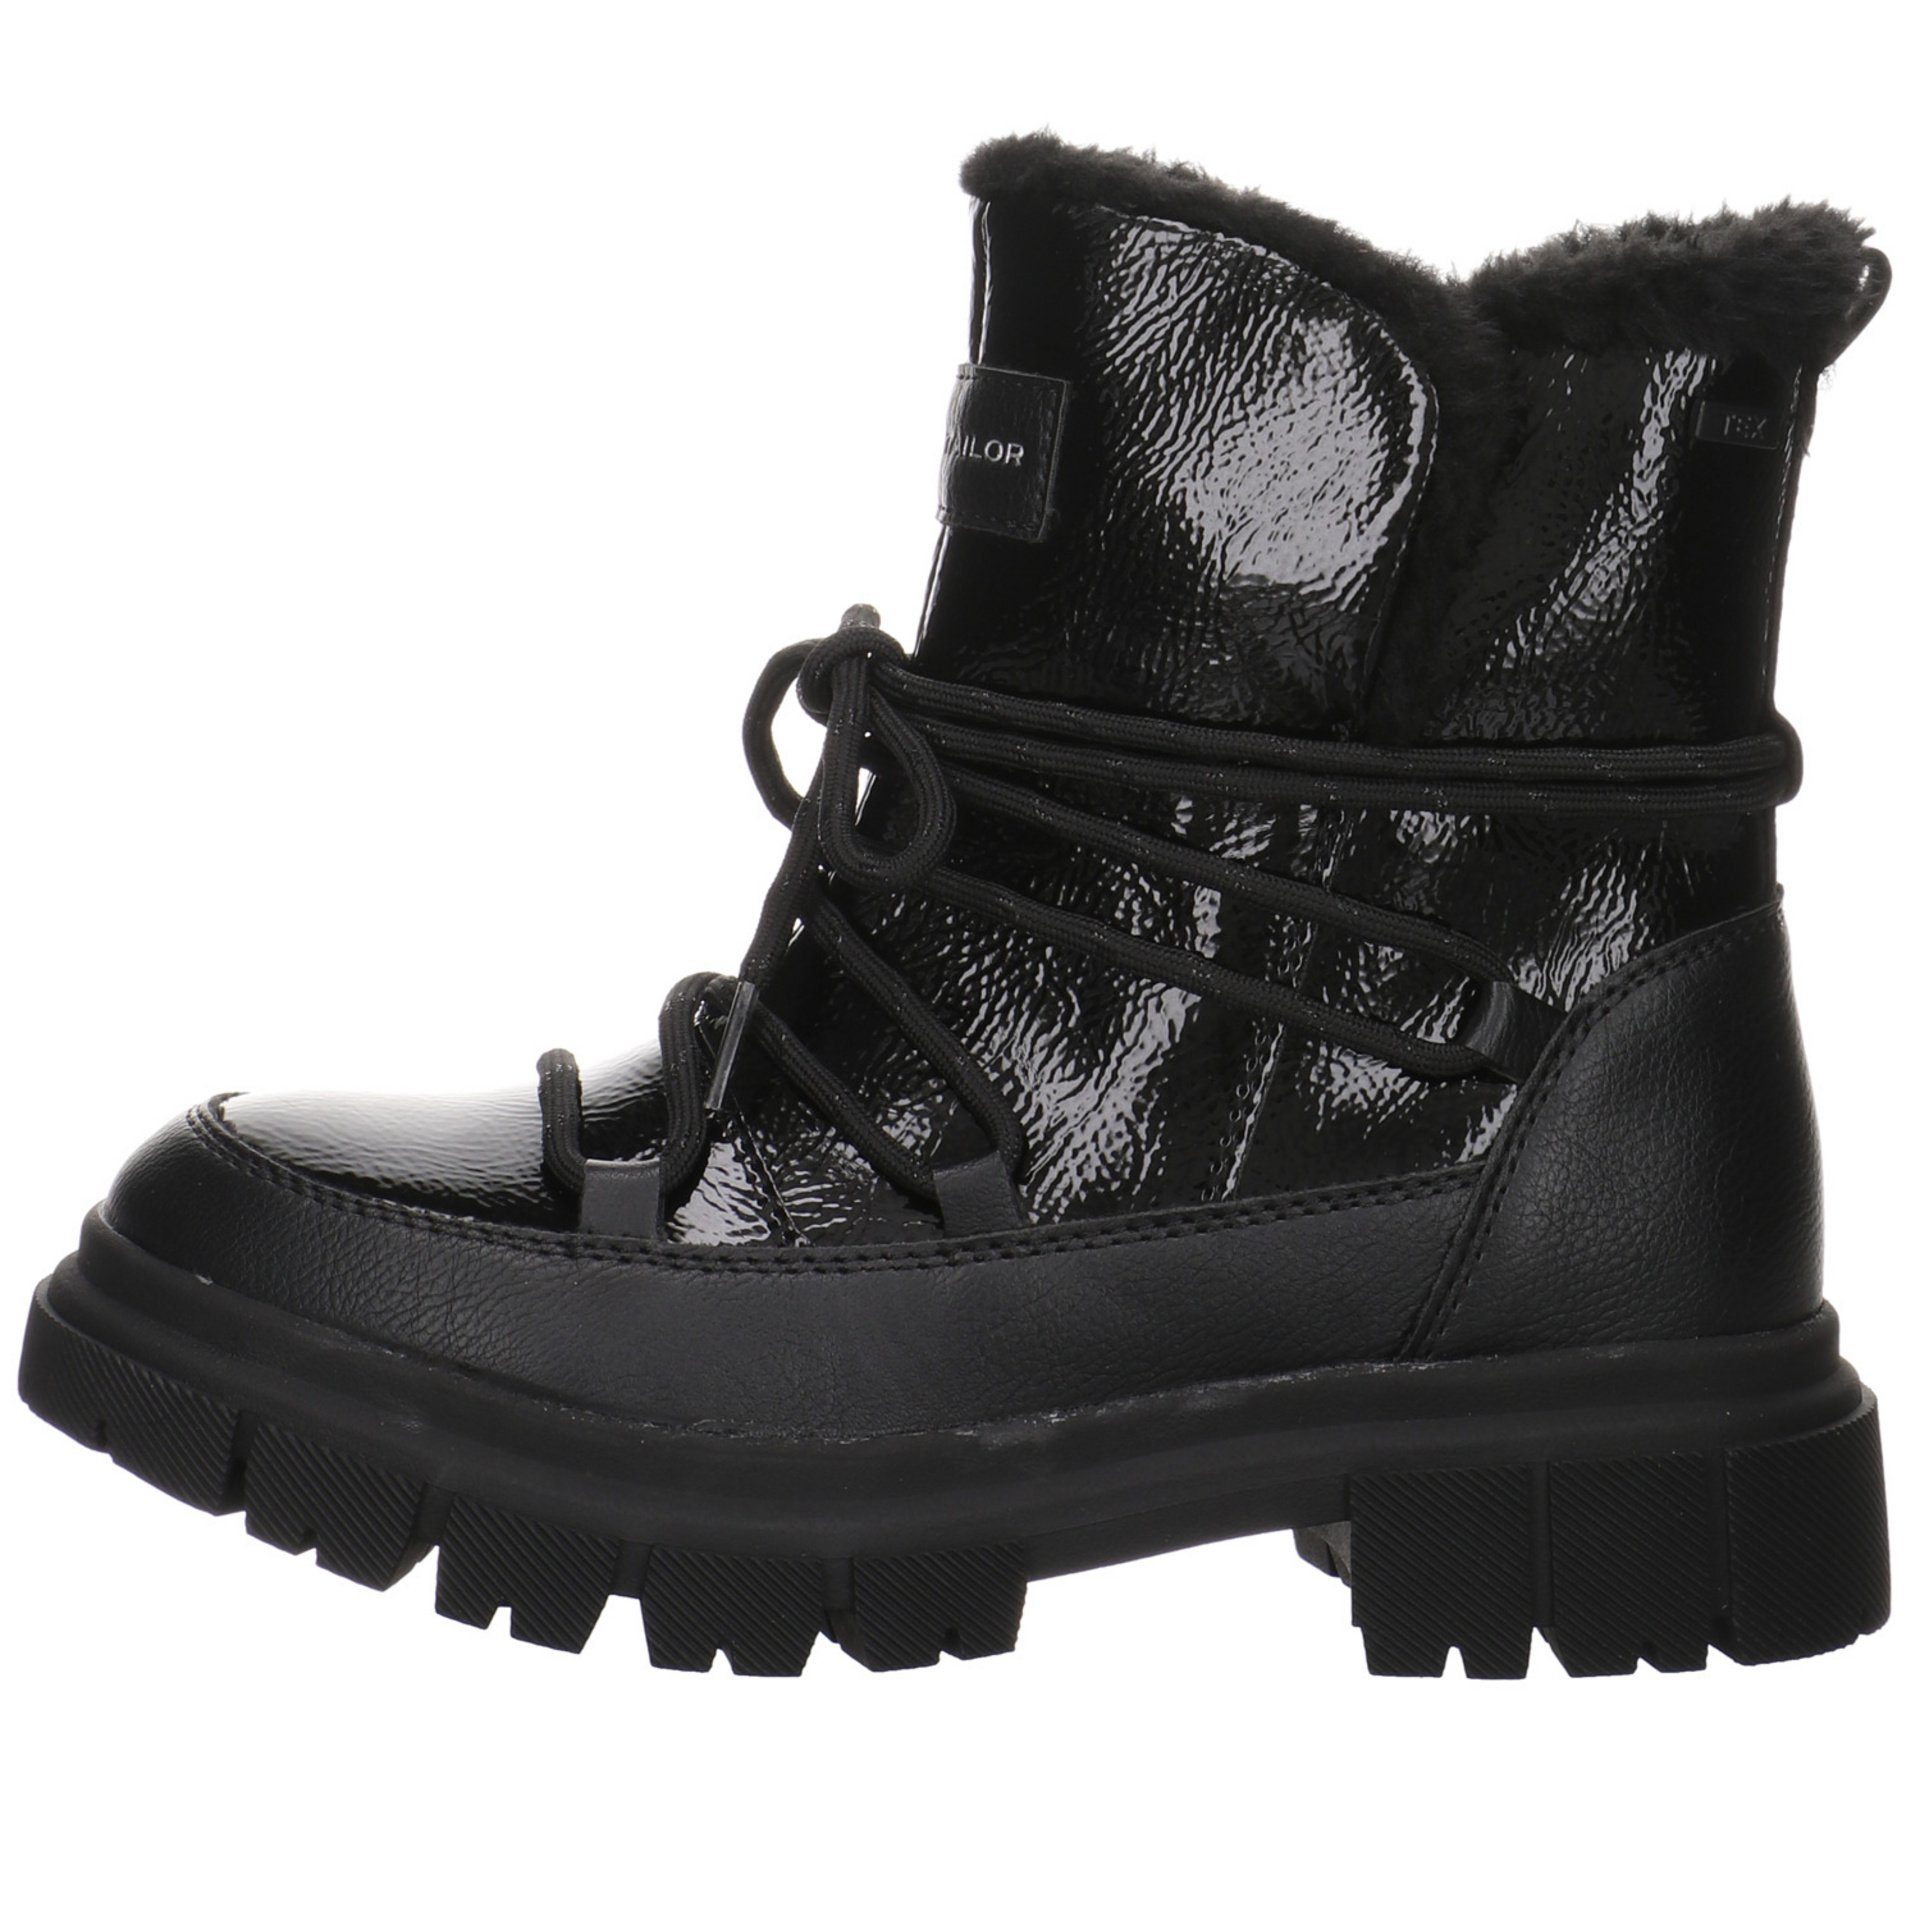 TOM TAILOR Mädchen Stiefel Kinderschuhe Schuhe Stiefelette black Synthetikkombination Boots